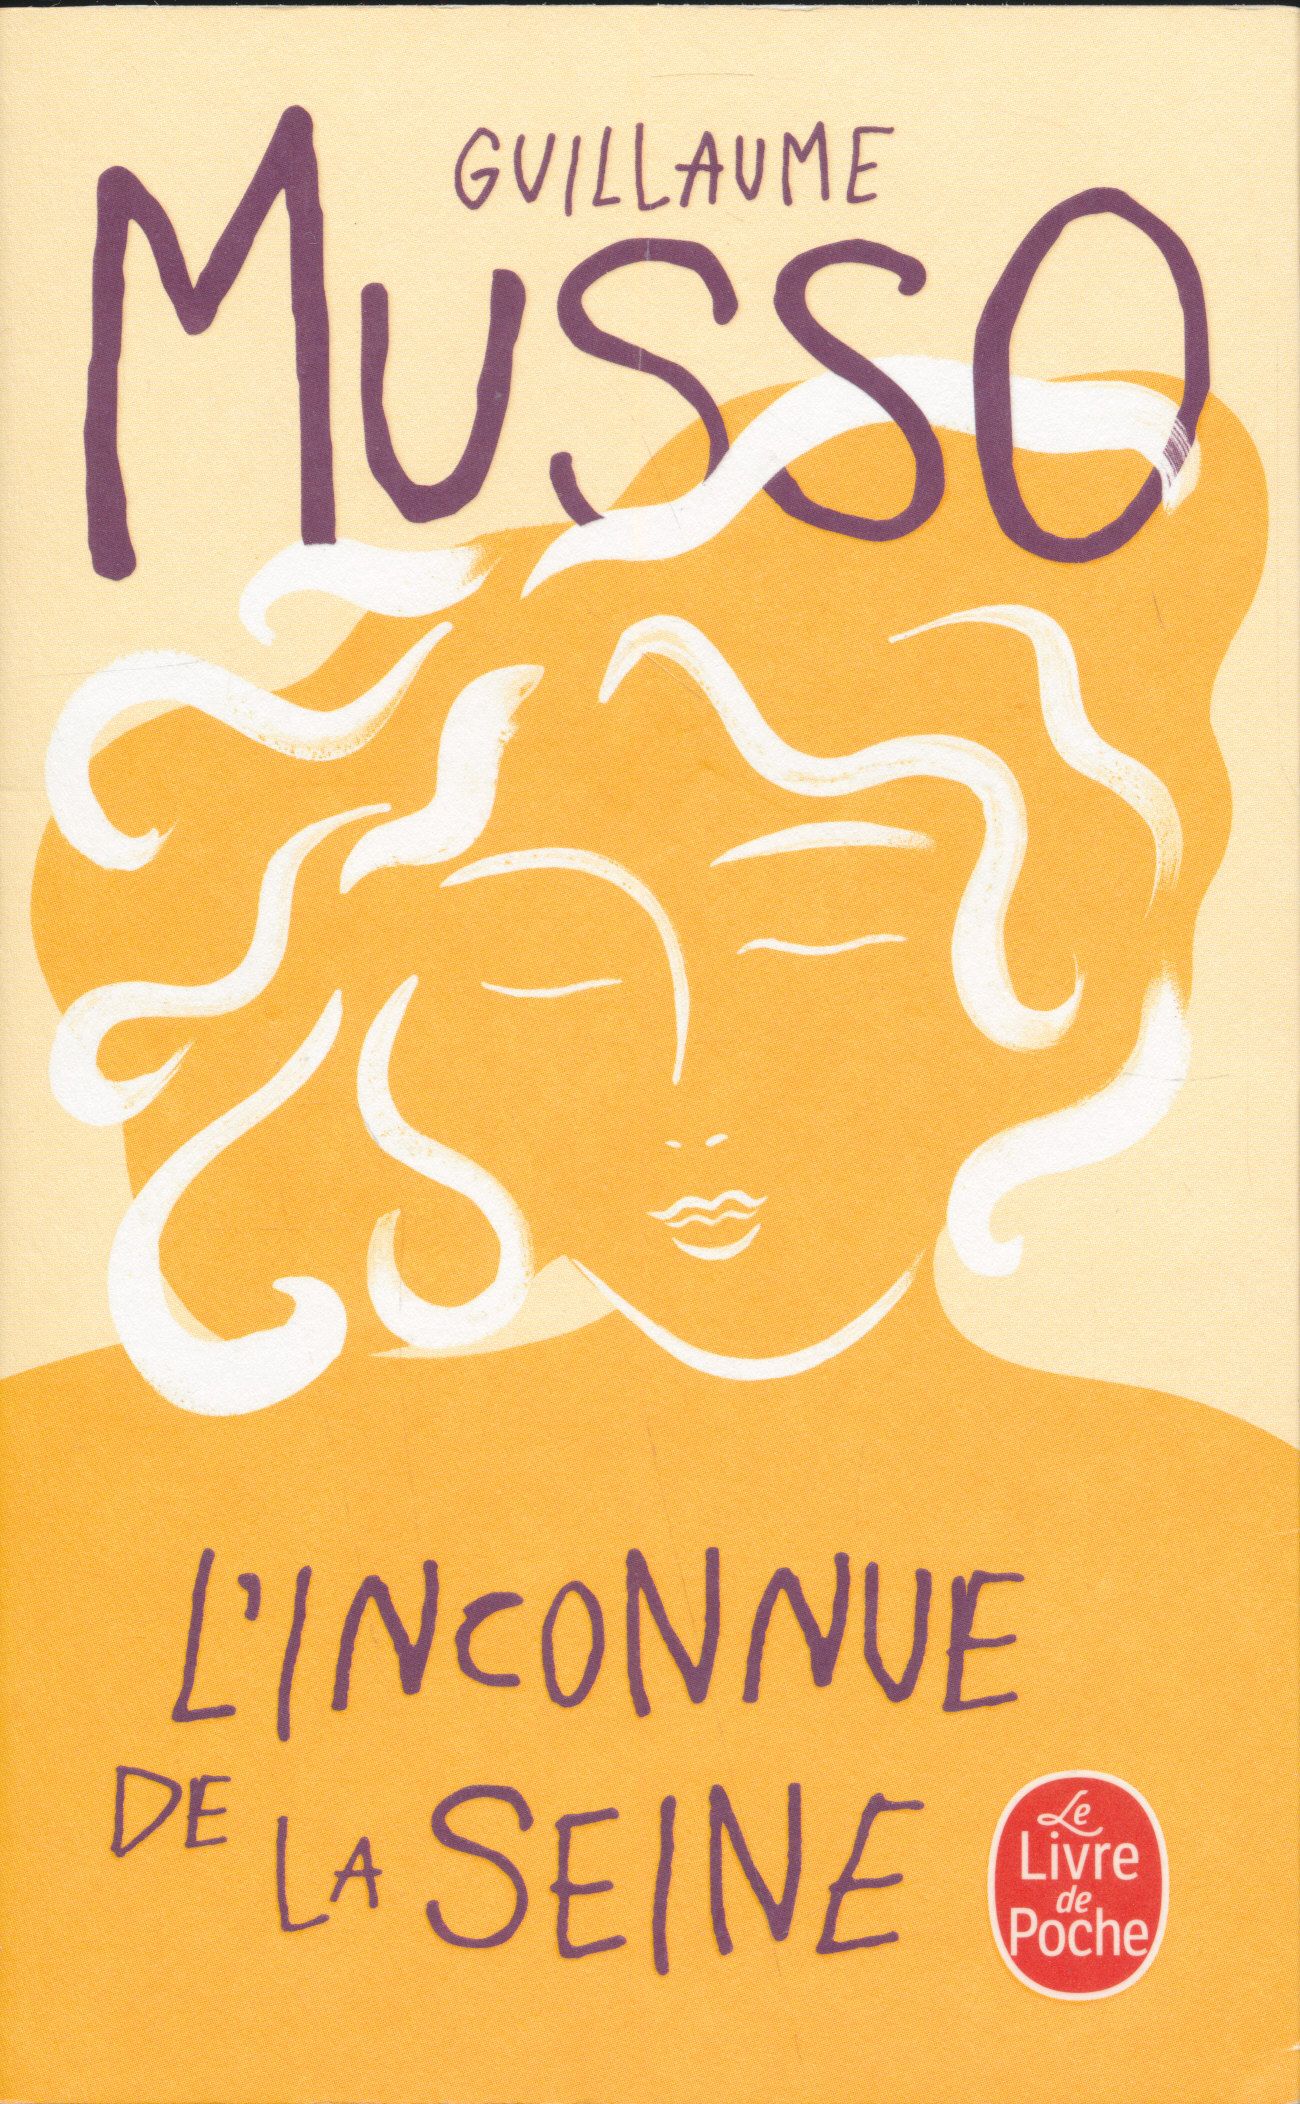 Guillaume Musso: L'Inconnue de la Seine, Nyelvkönyv forgalmazás -  Nyelvkönyvbolt